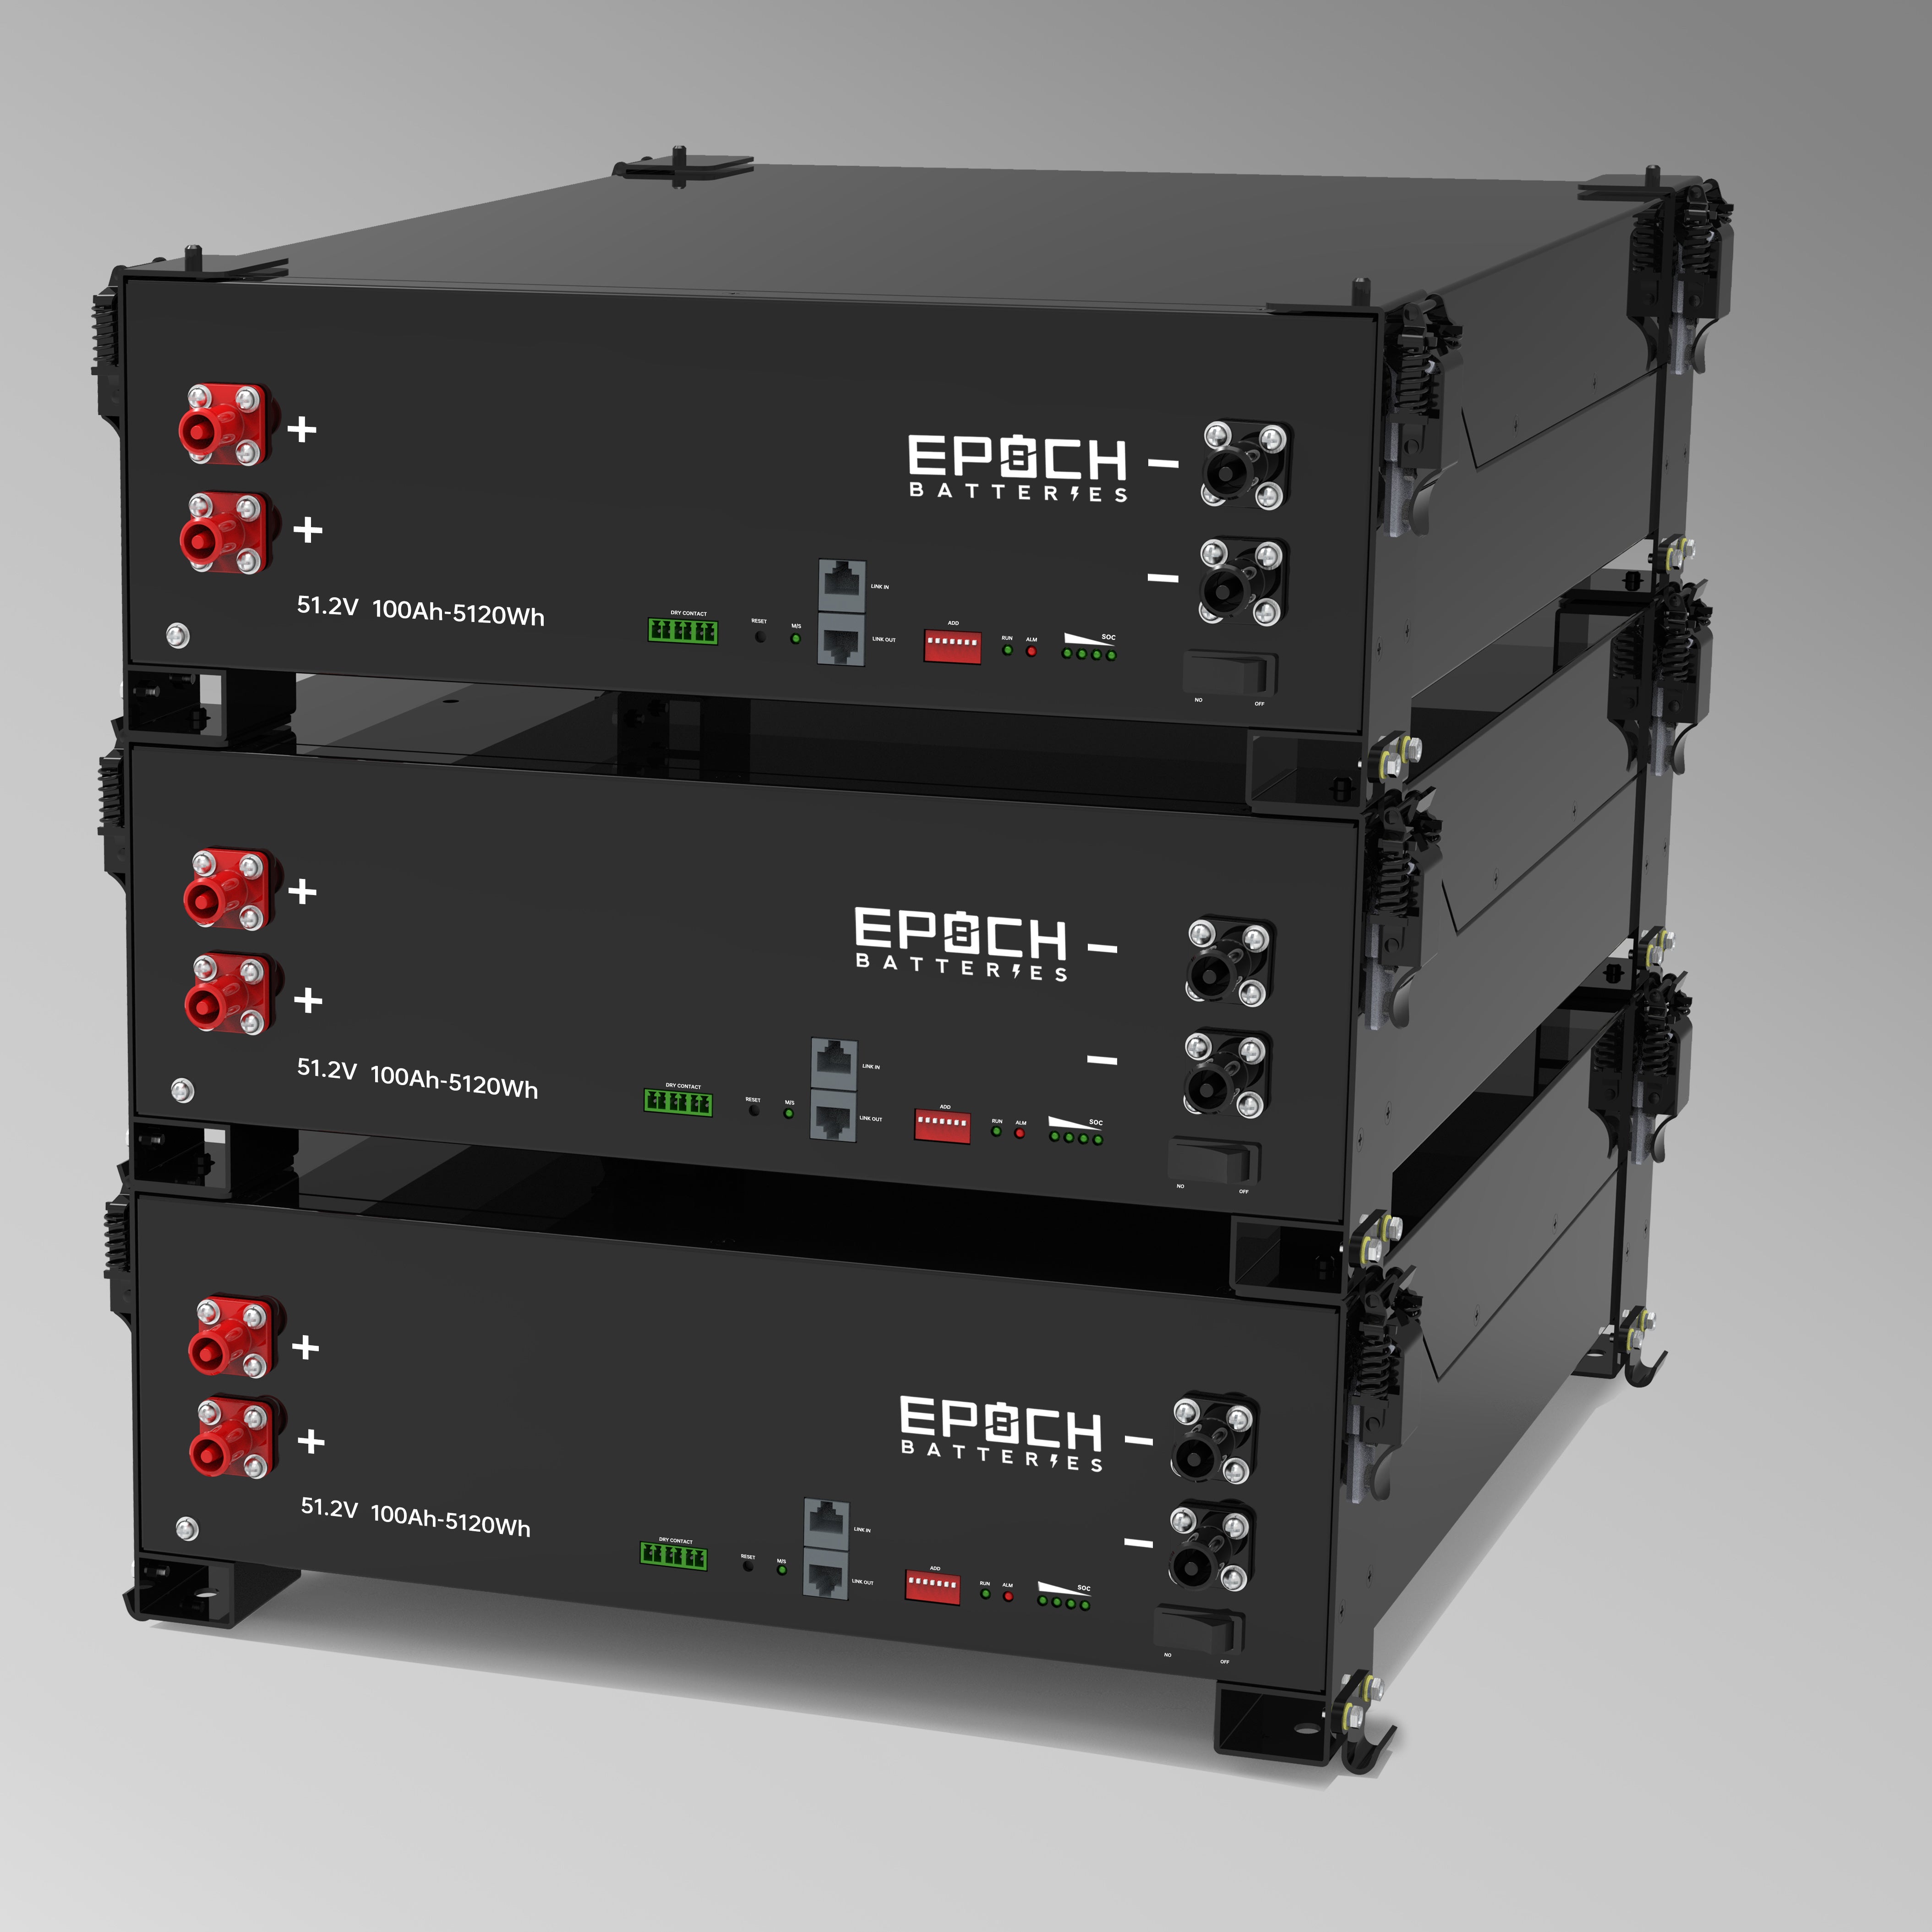 Epoch - 48V 100Ah 5.12kWh - Self-Heating Server Rack Lithium Battery